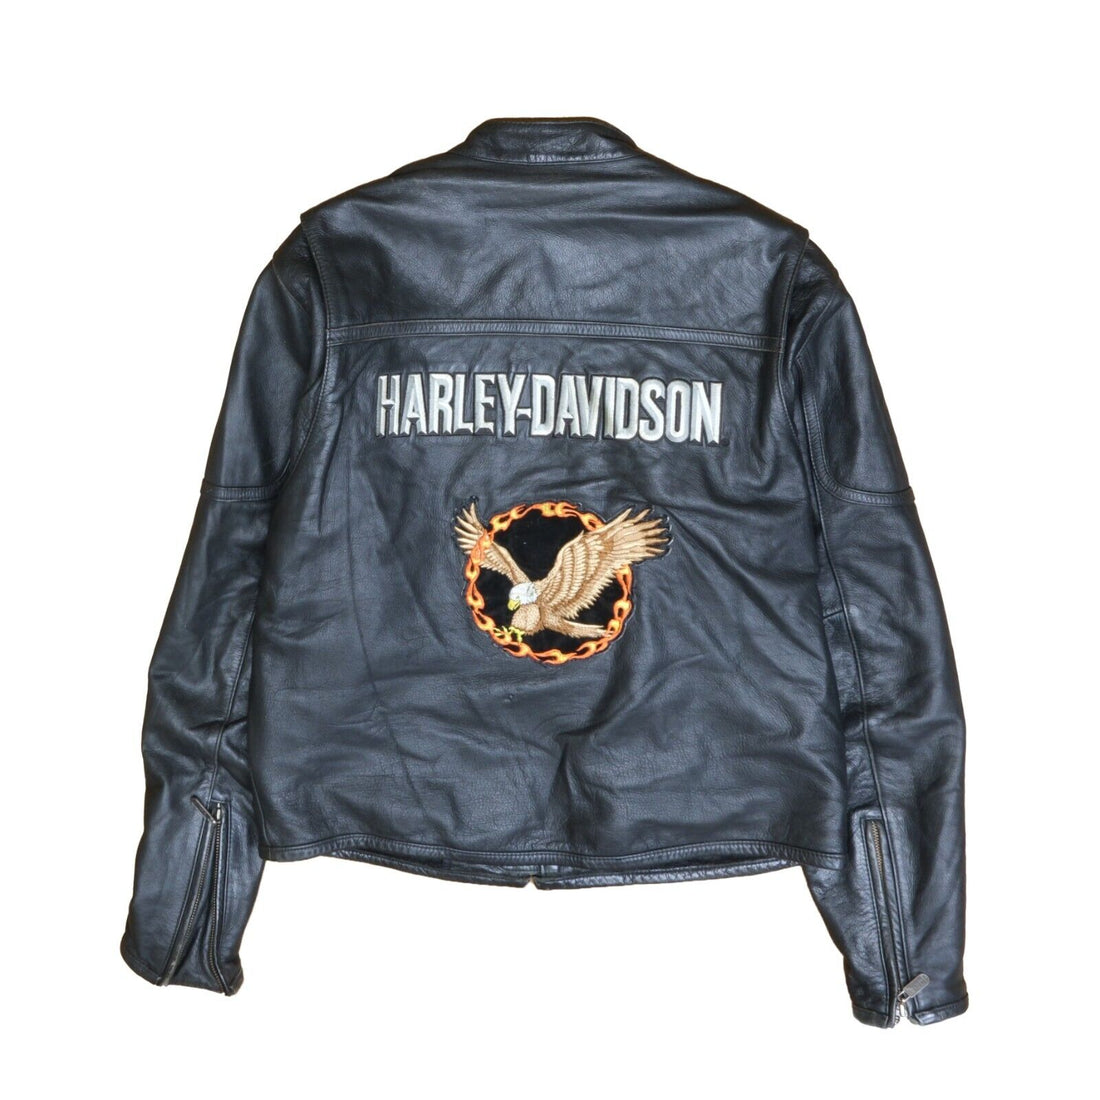 Vintage Harley Davidson Motorcycle Leather Cafe Racer Jacket Size Medium Eagle